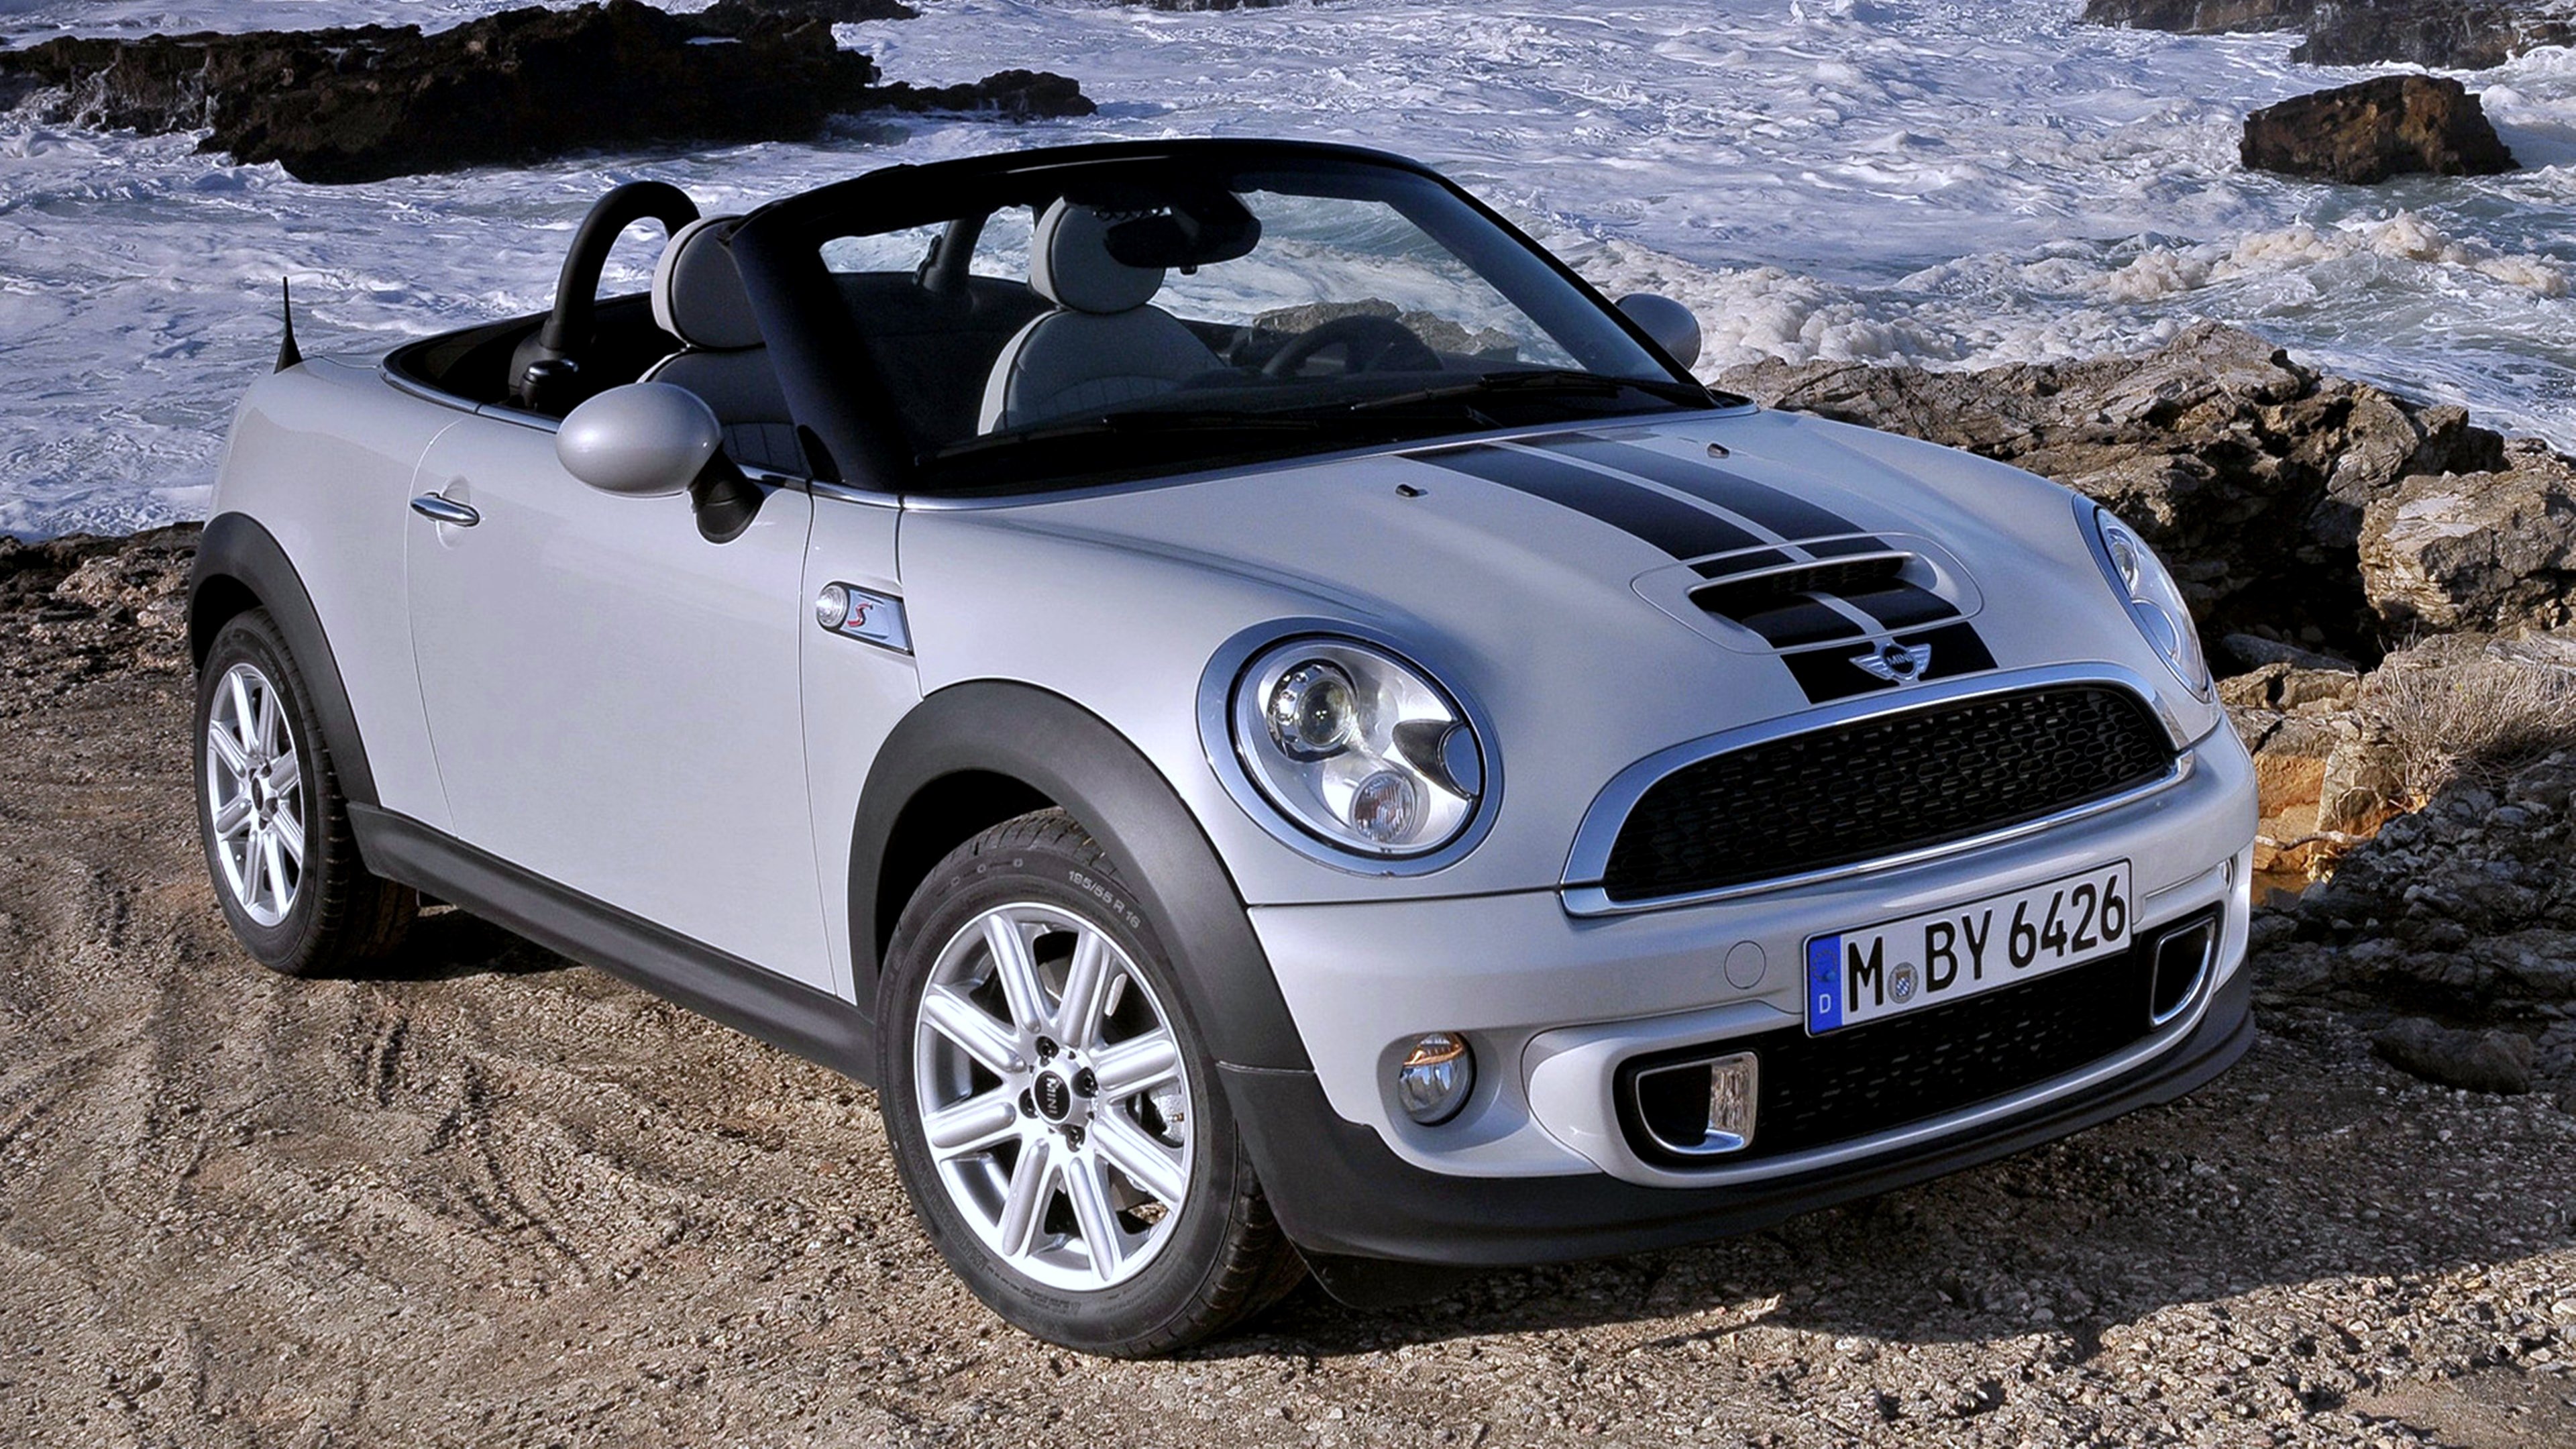 2012, Mini, Cooper, S, Roadster, Sea, Rocks, Beach, White, Roof, Cars, Motors, Auto, Speed Wallpaper